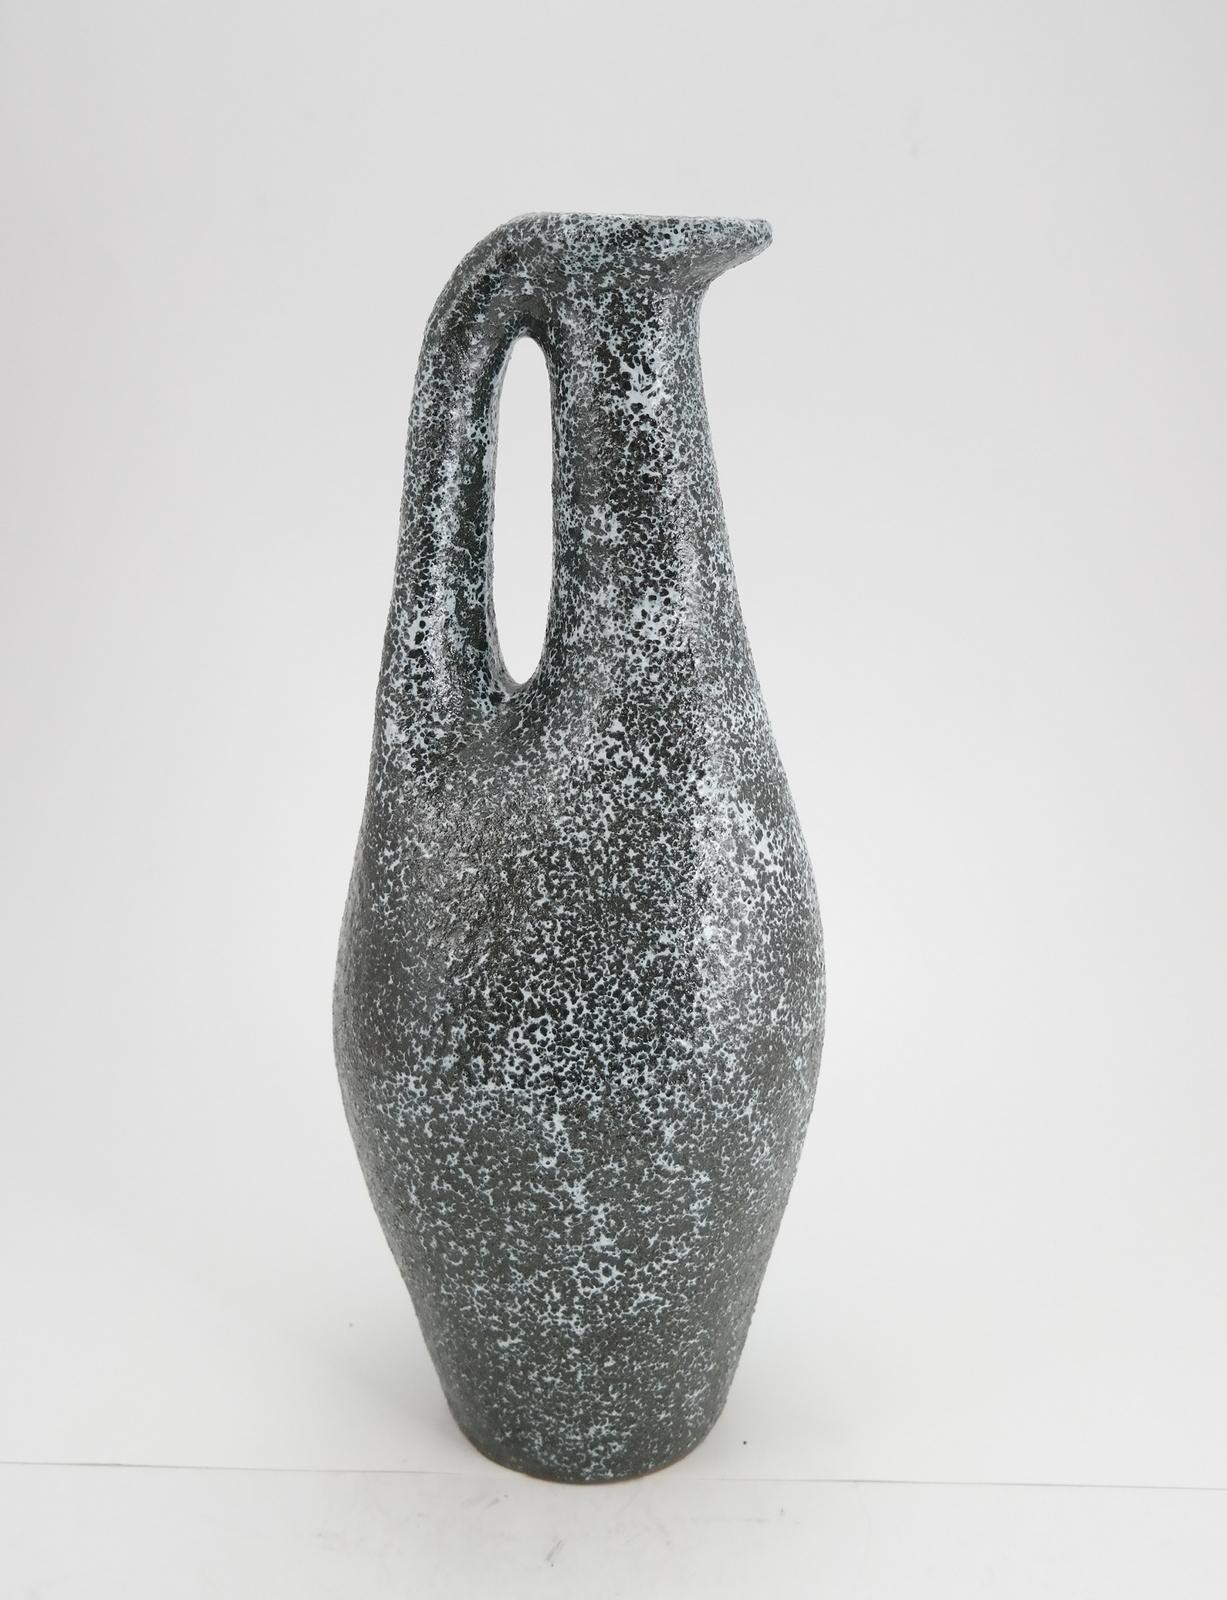 Orange and grey, this Mid-Century Modern ceramic vase was made 1970s.